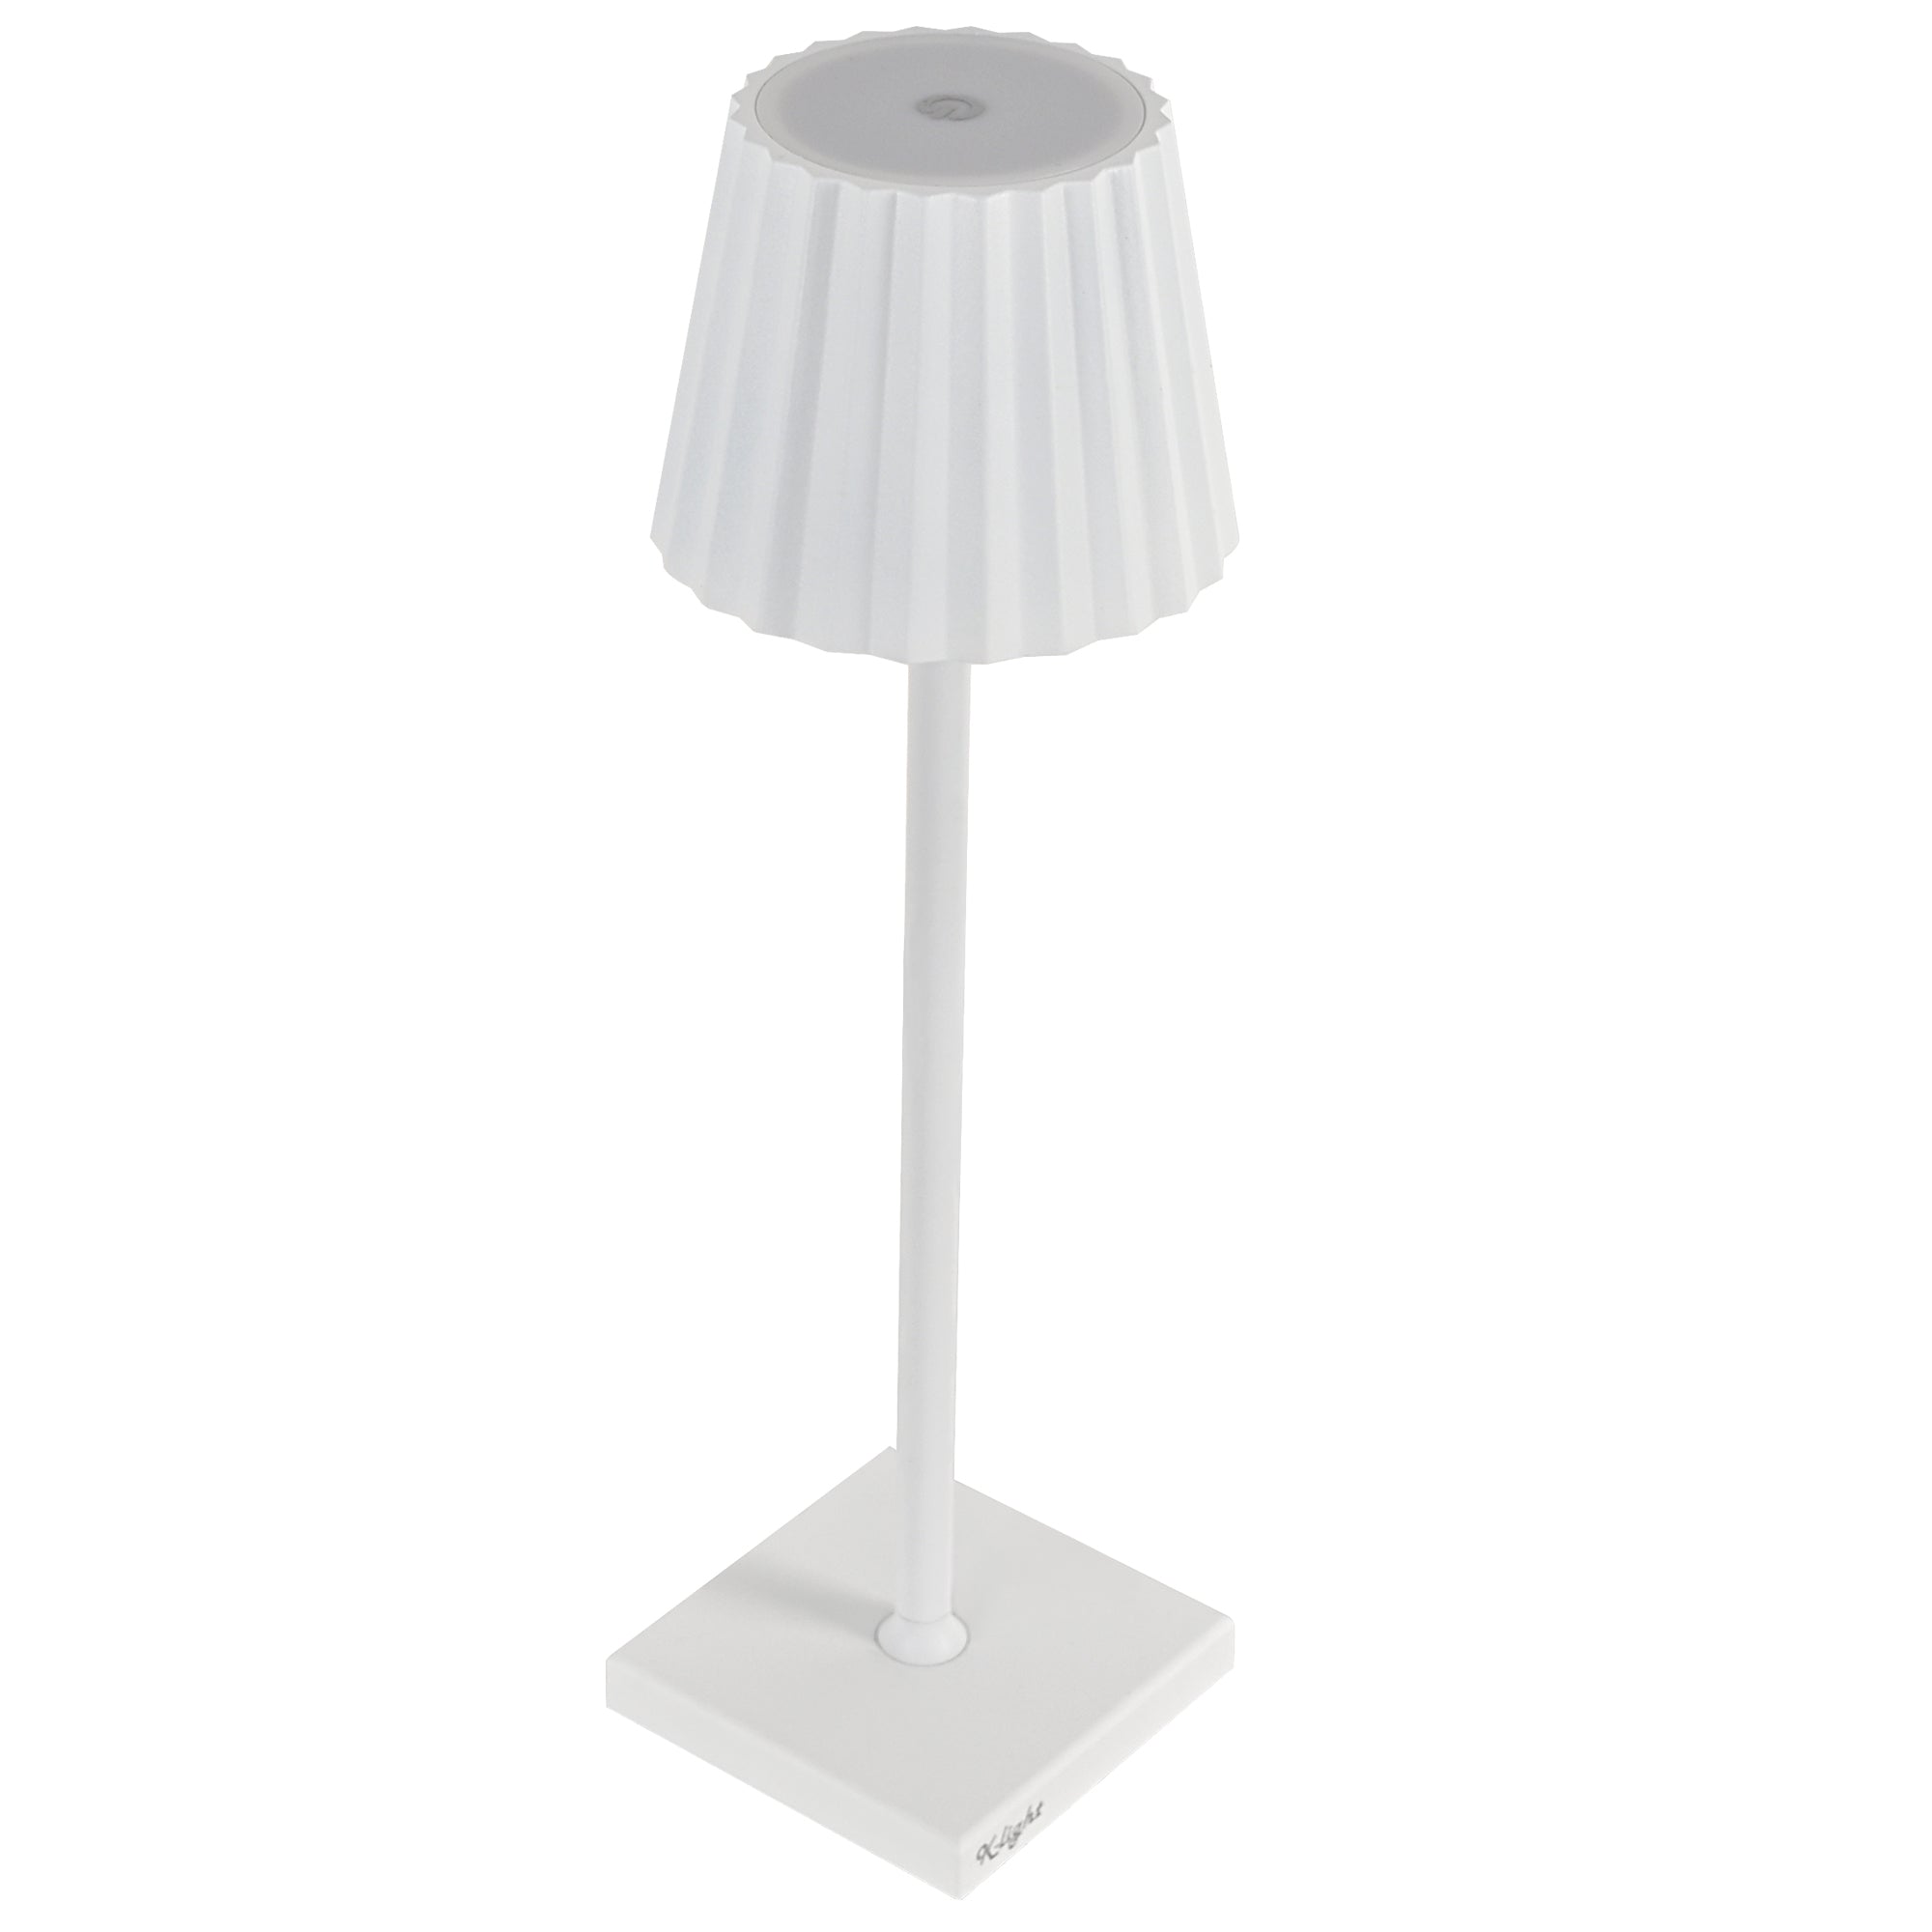 king-collection-lampada-tavolo-led-alluminio-pmma-bianco